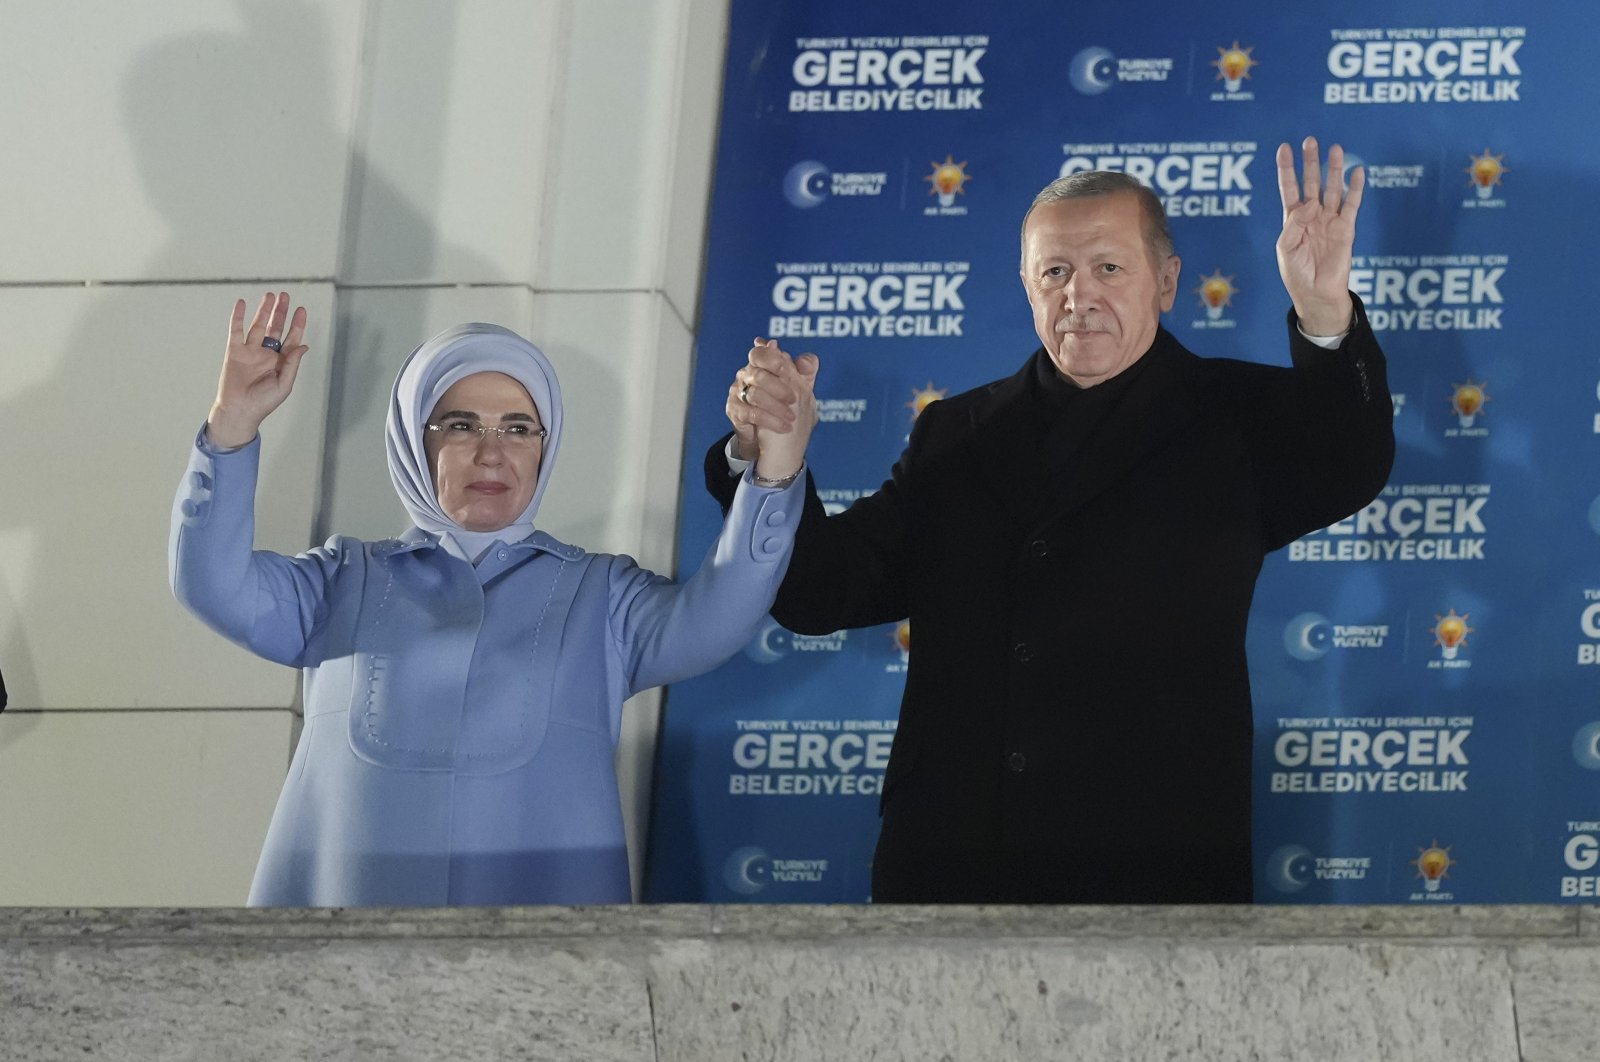 Erdoğan lauds democracy’s victory in municipal elections